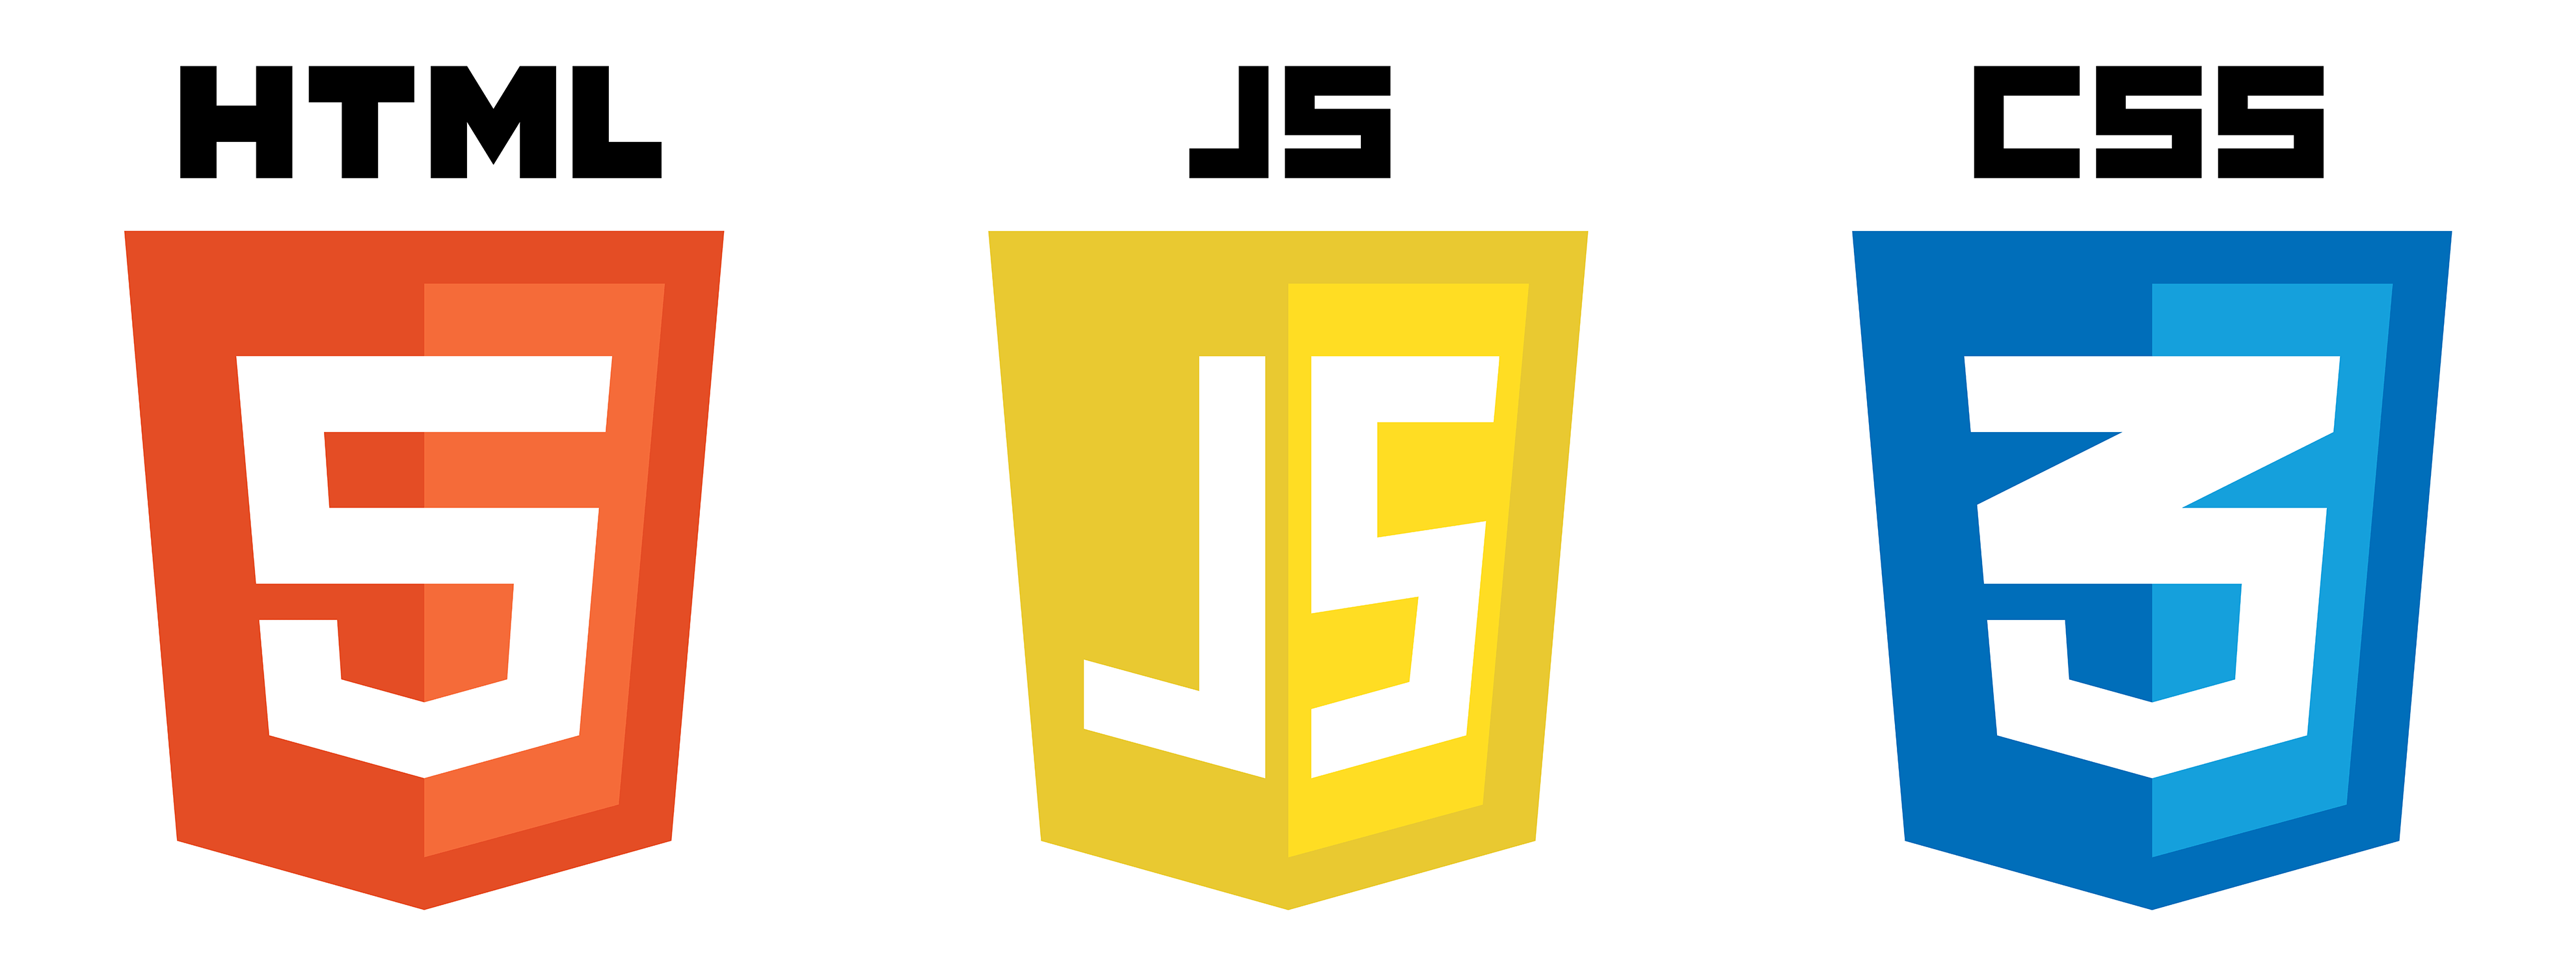 HTML5 CSS3 JavaScript Logo